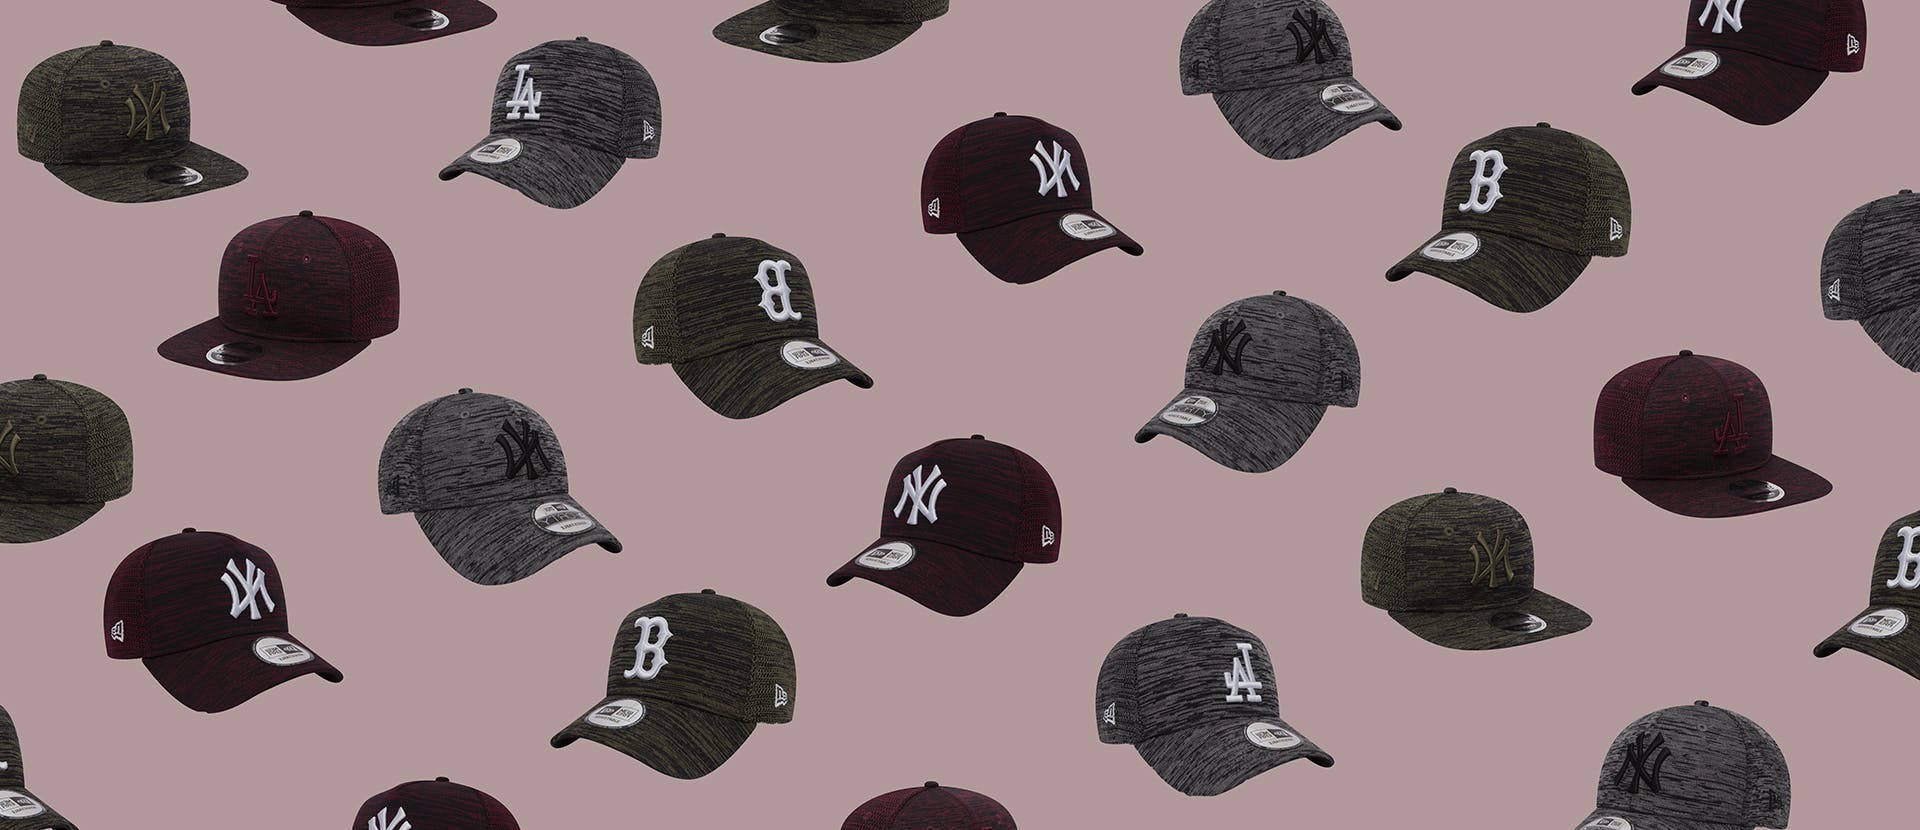 clothing apparel bird animal hat cap baseball cap